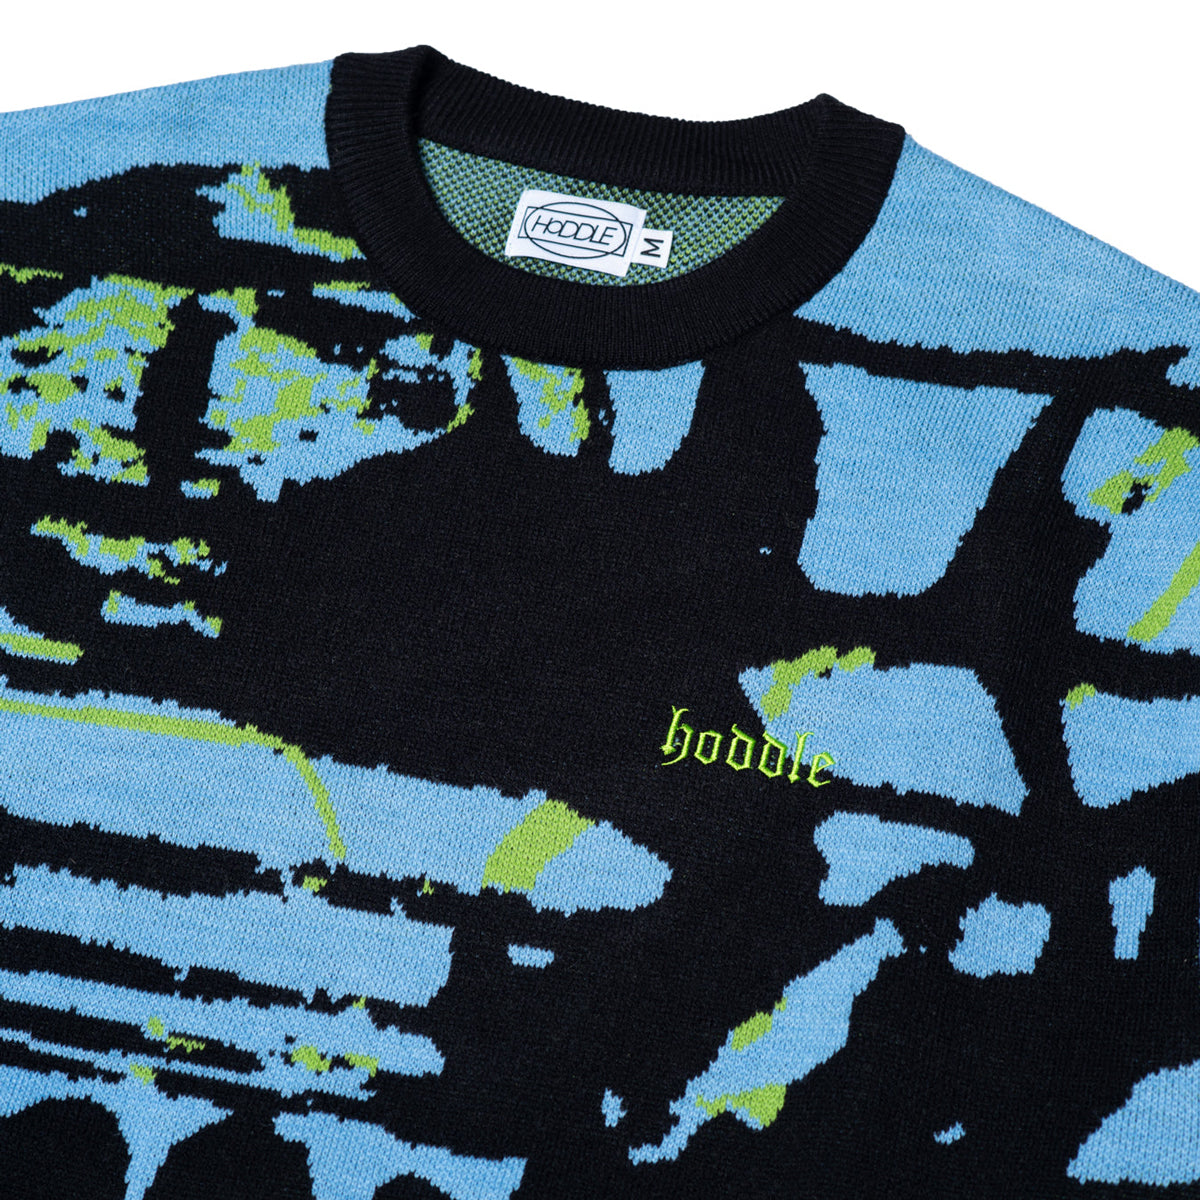 Hoddle Dungieon Knit Shirt - Blue/Black/Green image 4